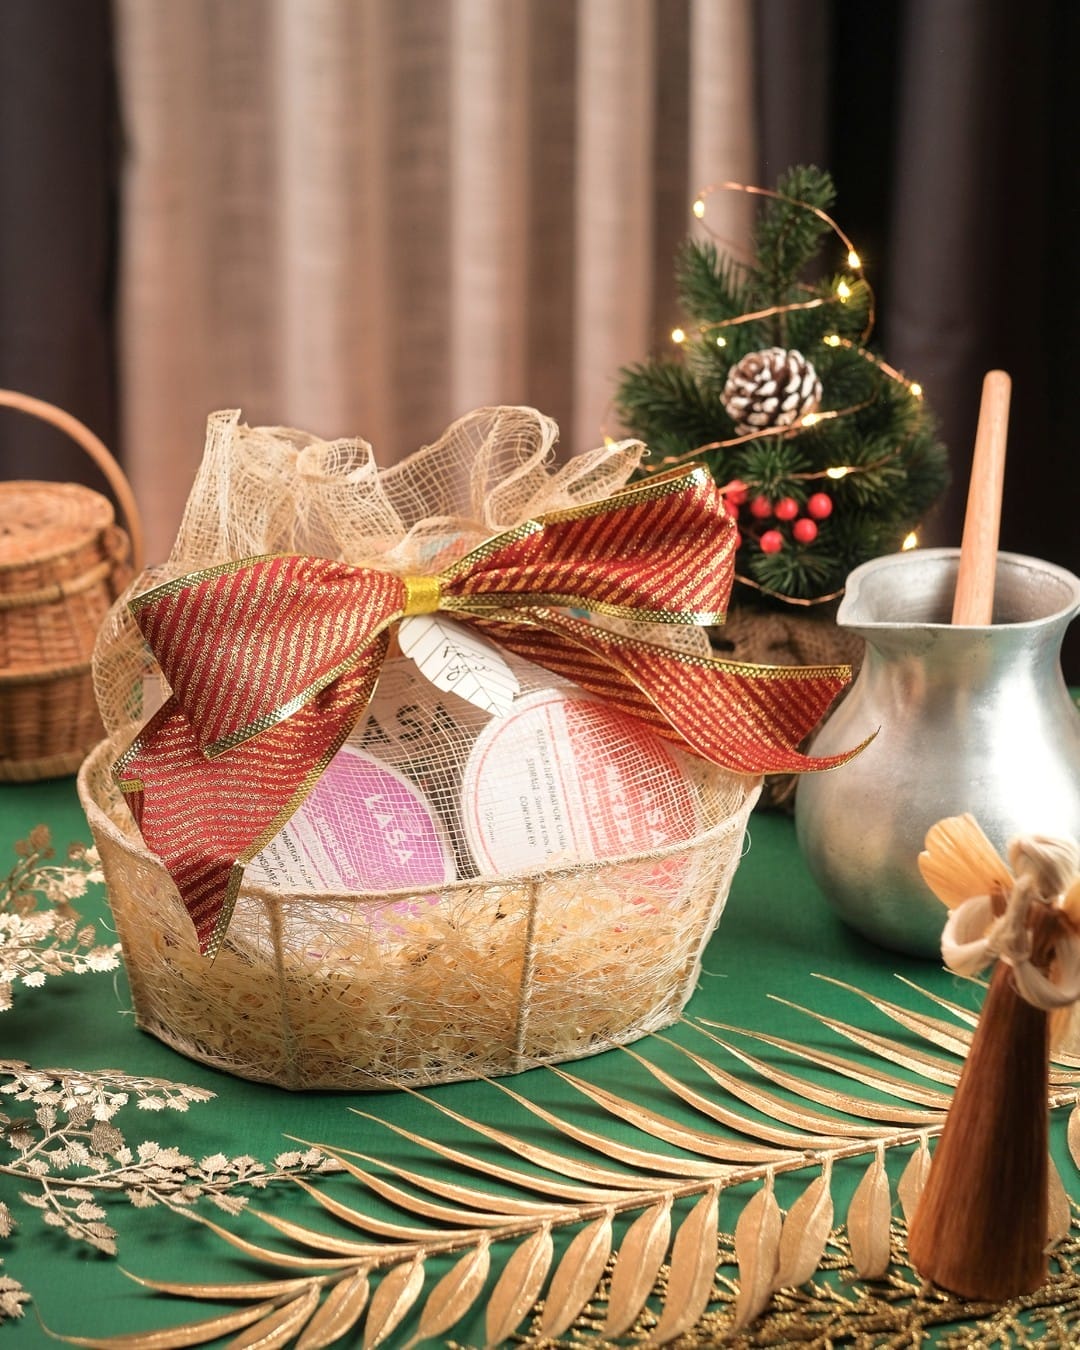 A basket with a LASA Tsokolate Gift Sets and a christmas tree on a green table.